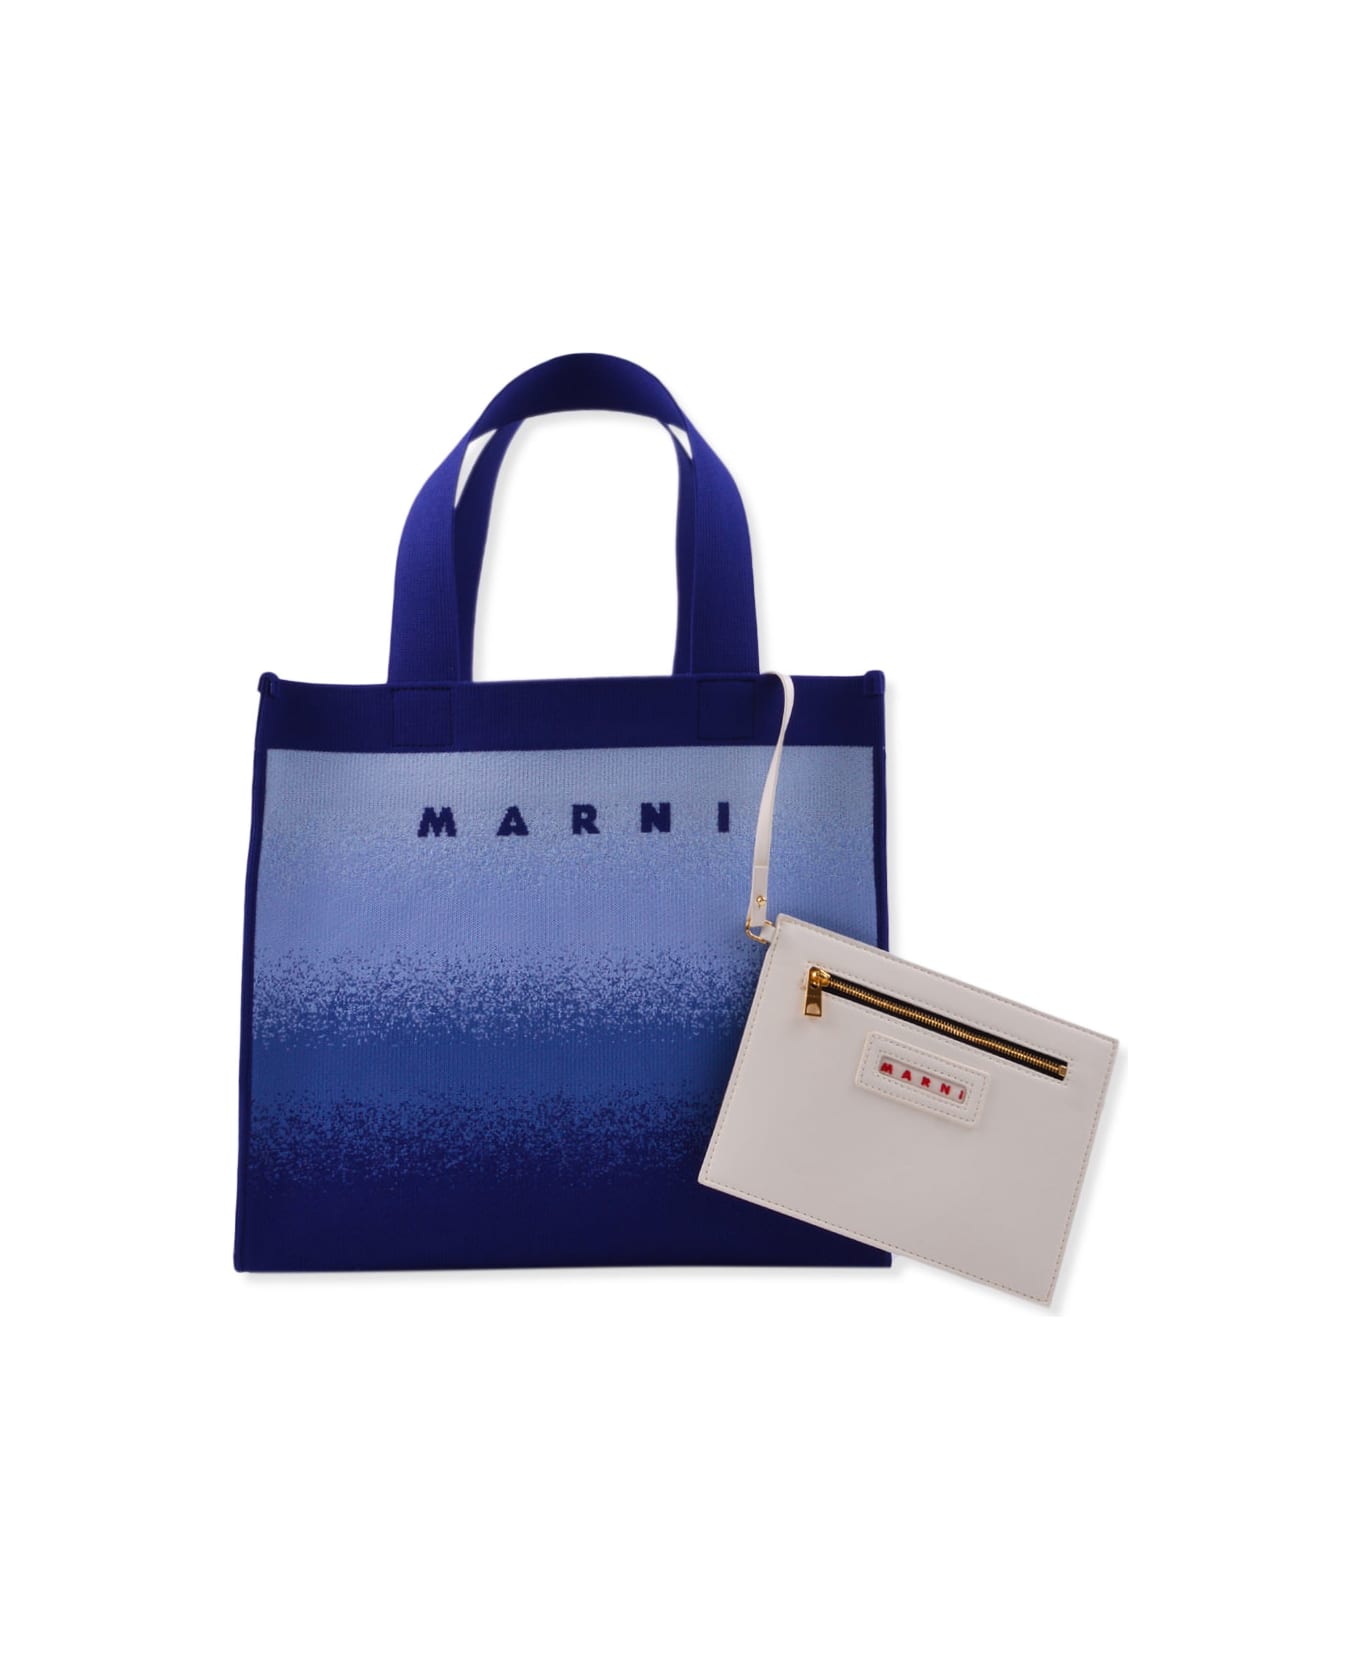 Marni Handbag - Blue トートバッグ